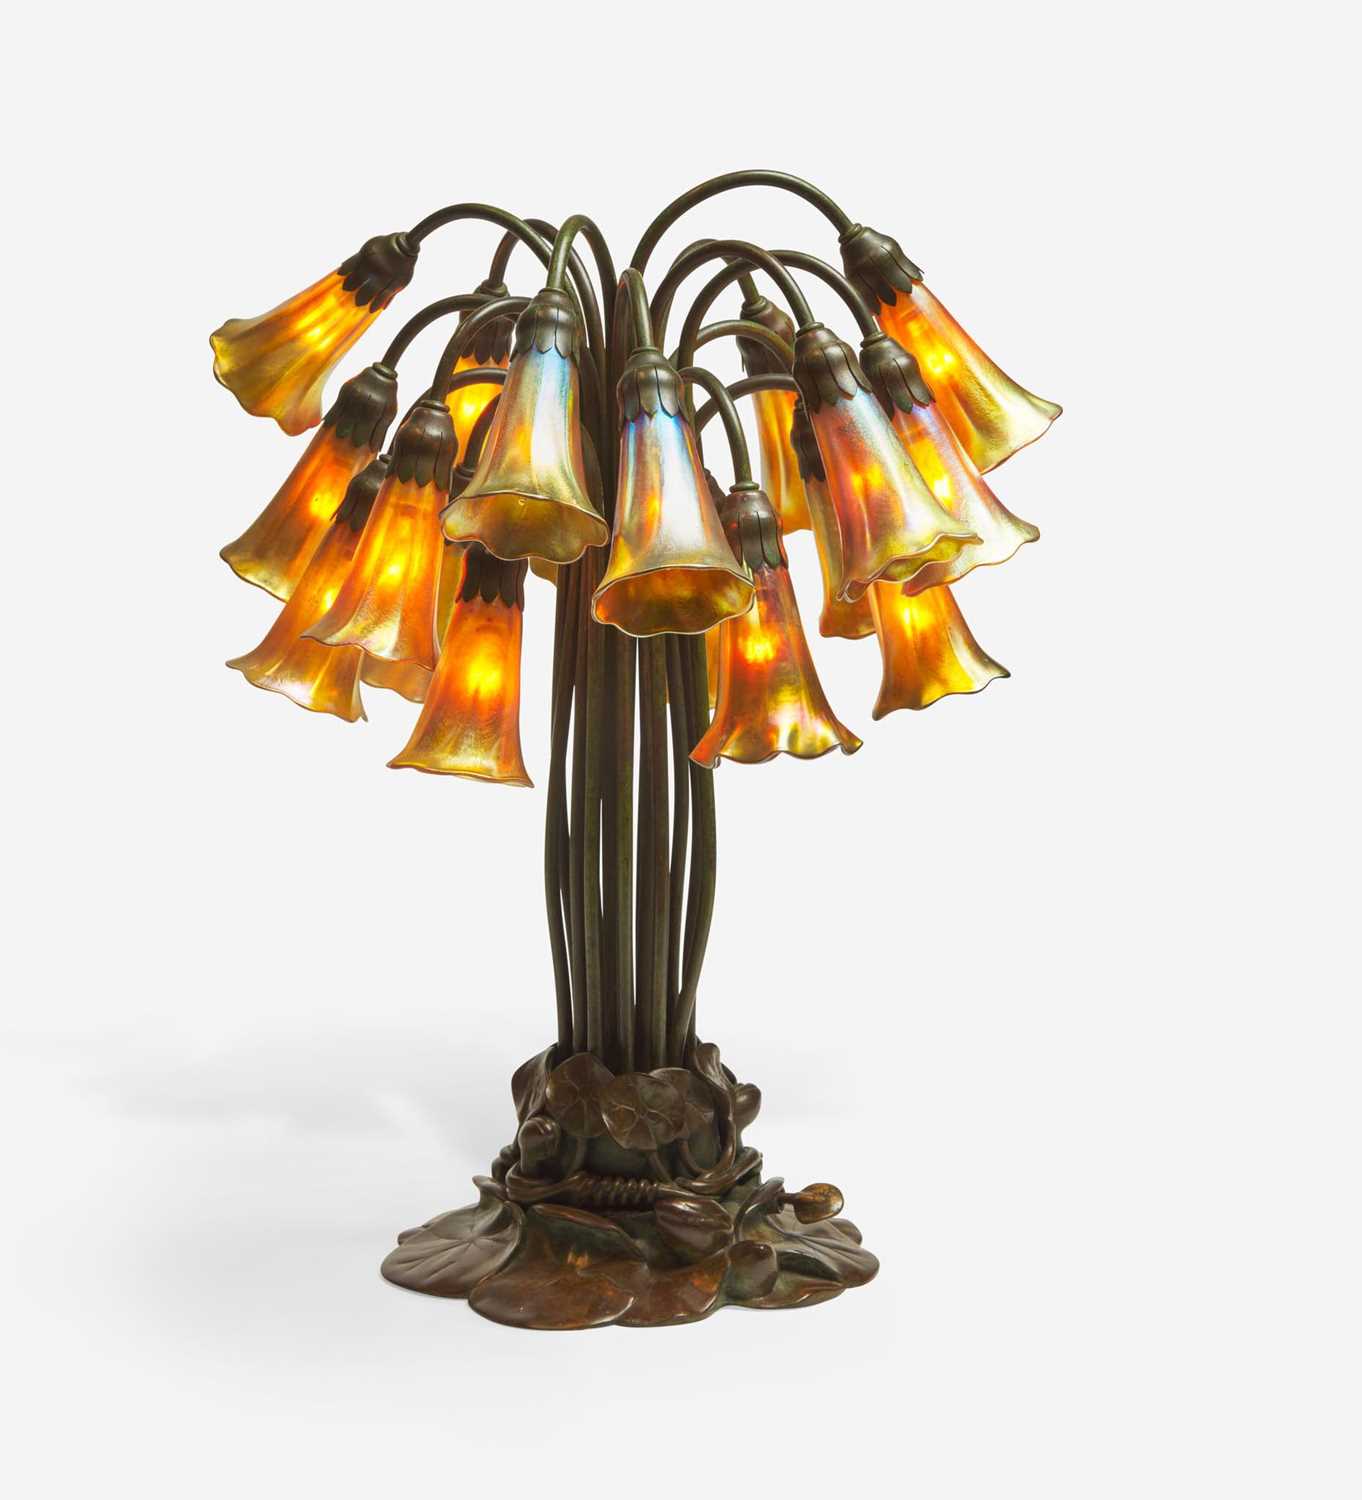 Tiffany Studios (American, active 1878-1932) An Eighteen-Light "Lily" Table Lamp, New York, NY,